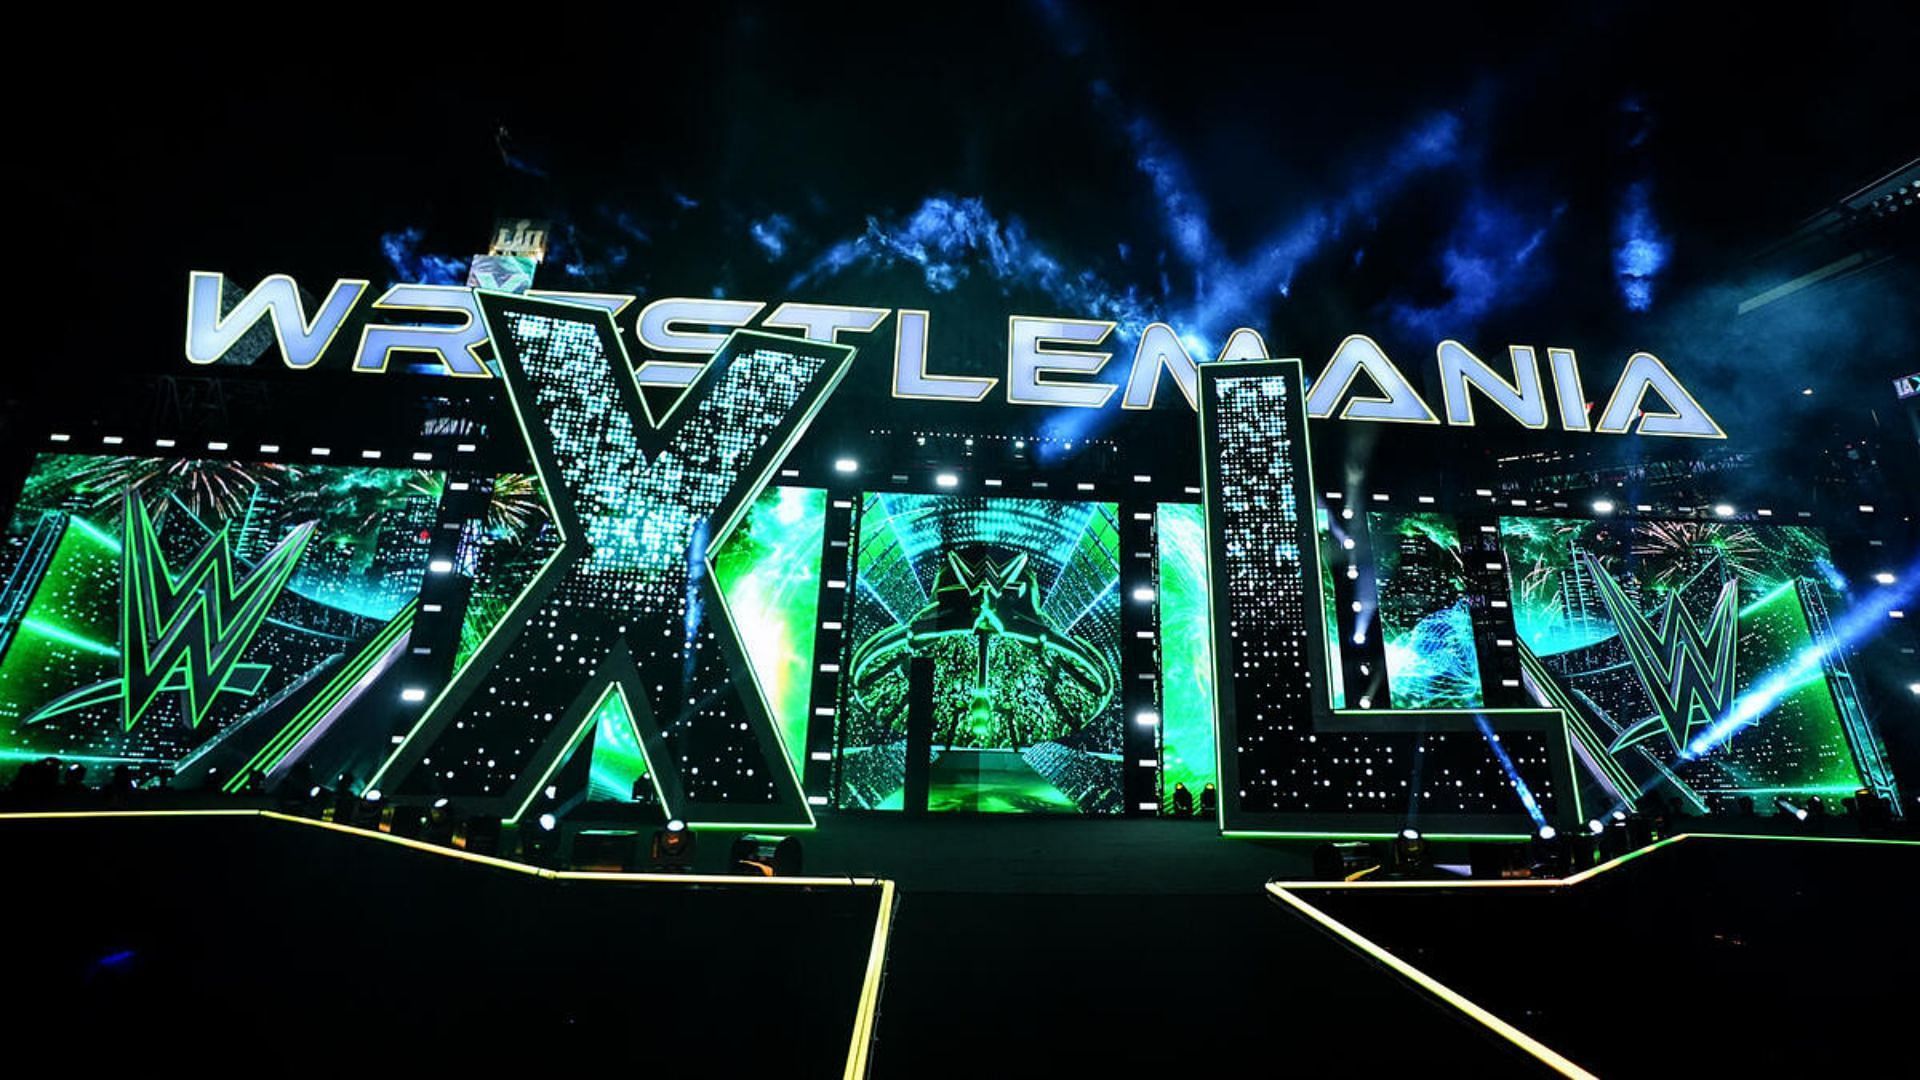 WrestleMania XL took place in Philadelphia last weekend.